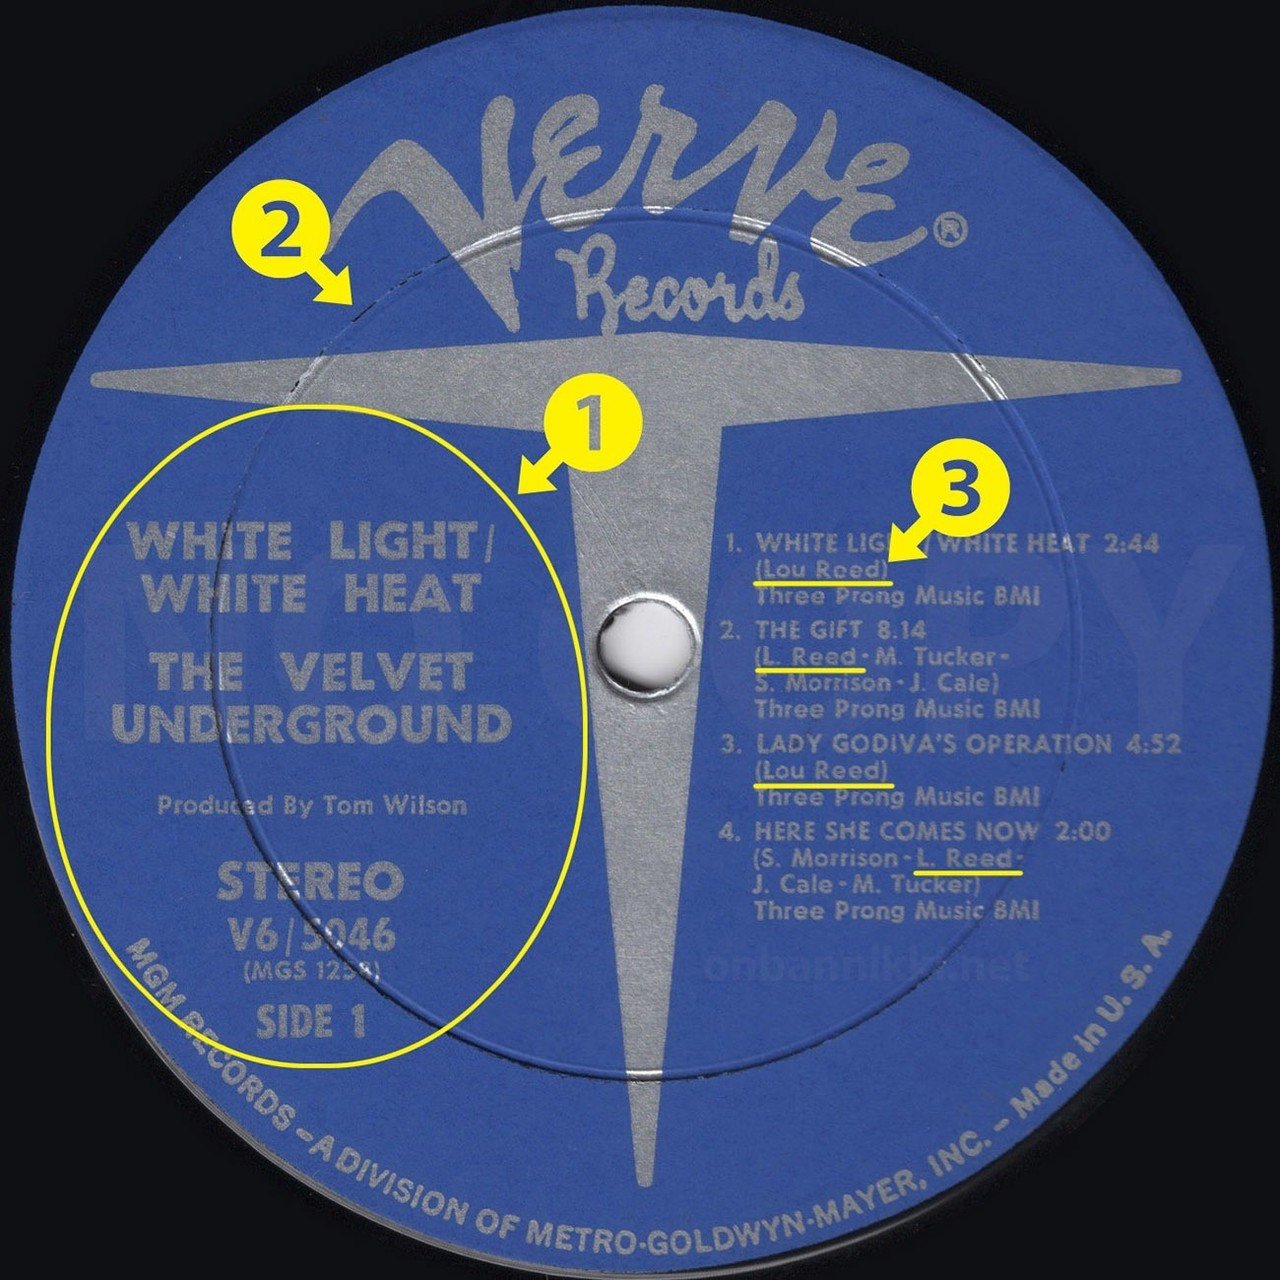 White Light / White Heat ラベルの違い - Verve USオリジナル盤周辺